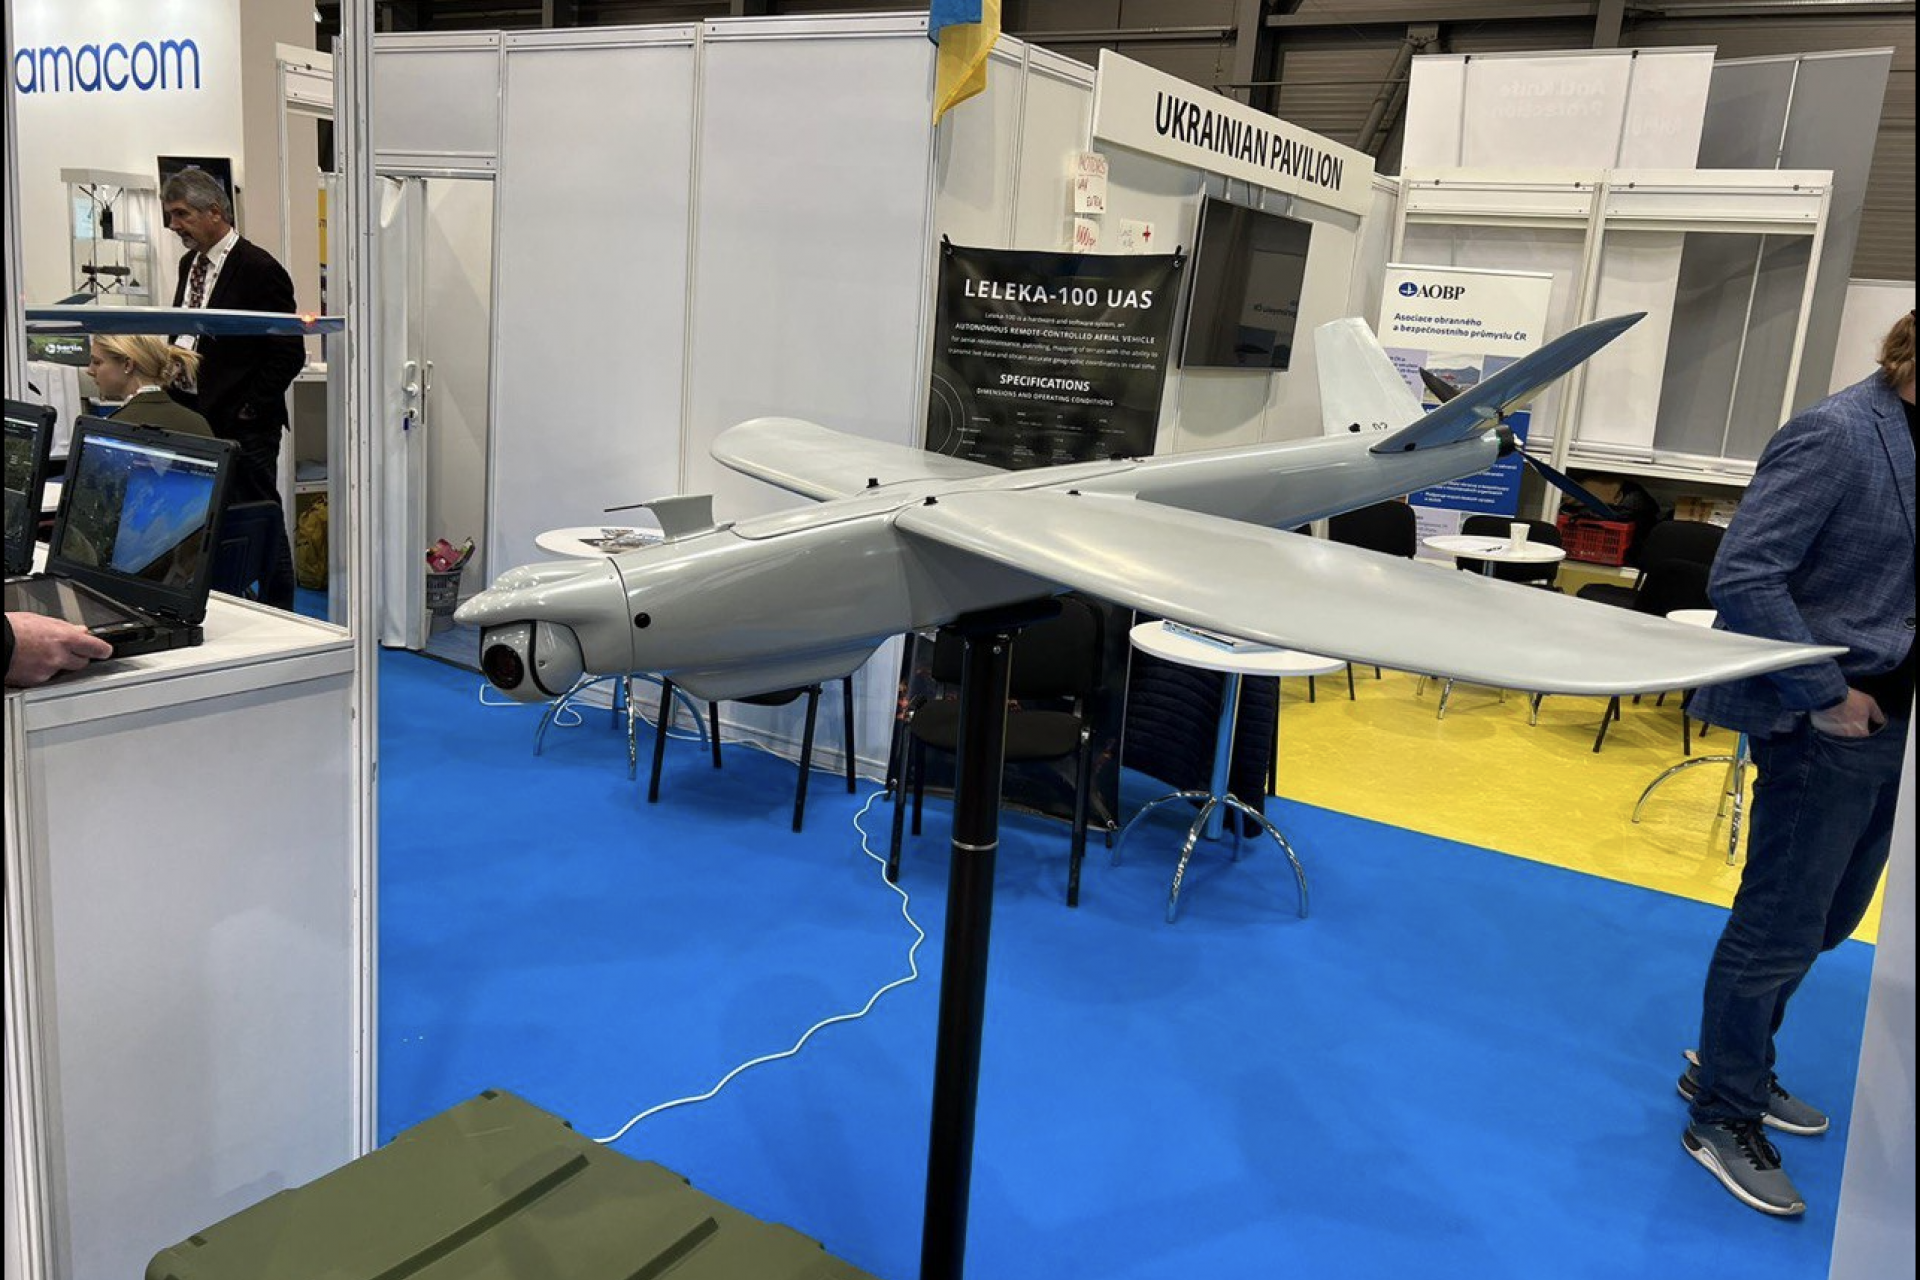 Ukraine made its own Lancet drone 